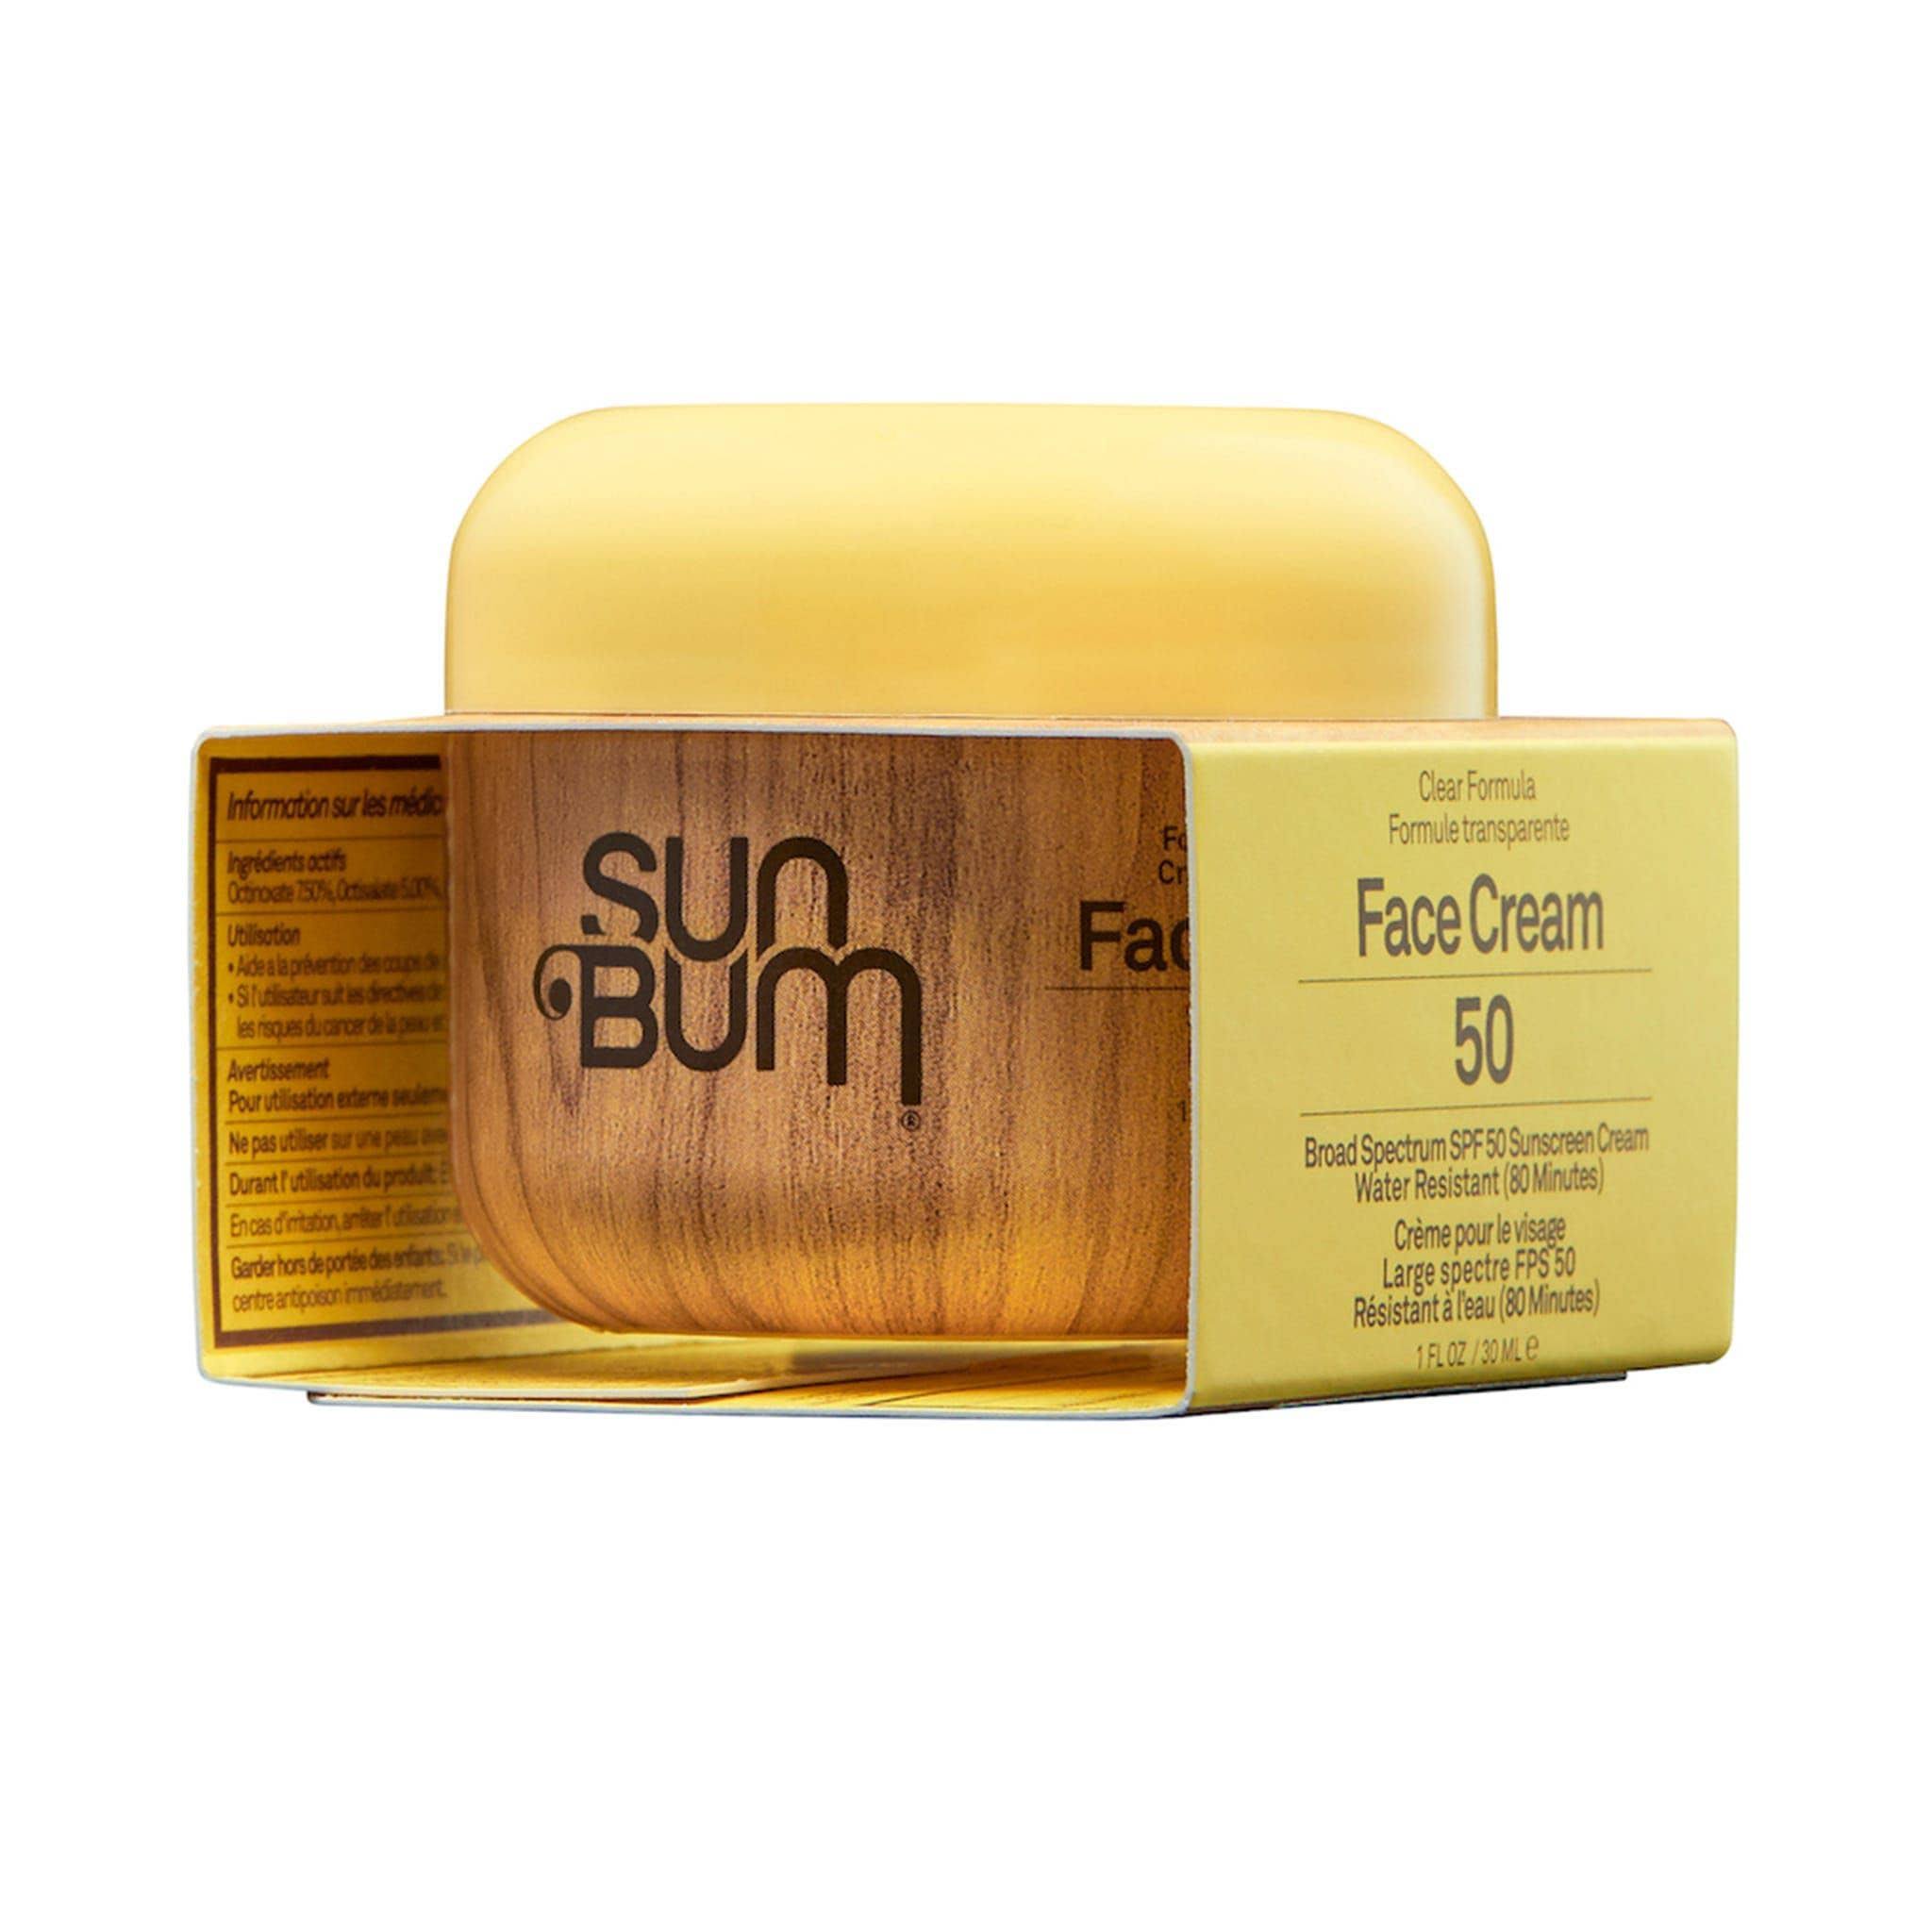 Sun Bum SPF 50 Face Cream - Sunscreen